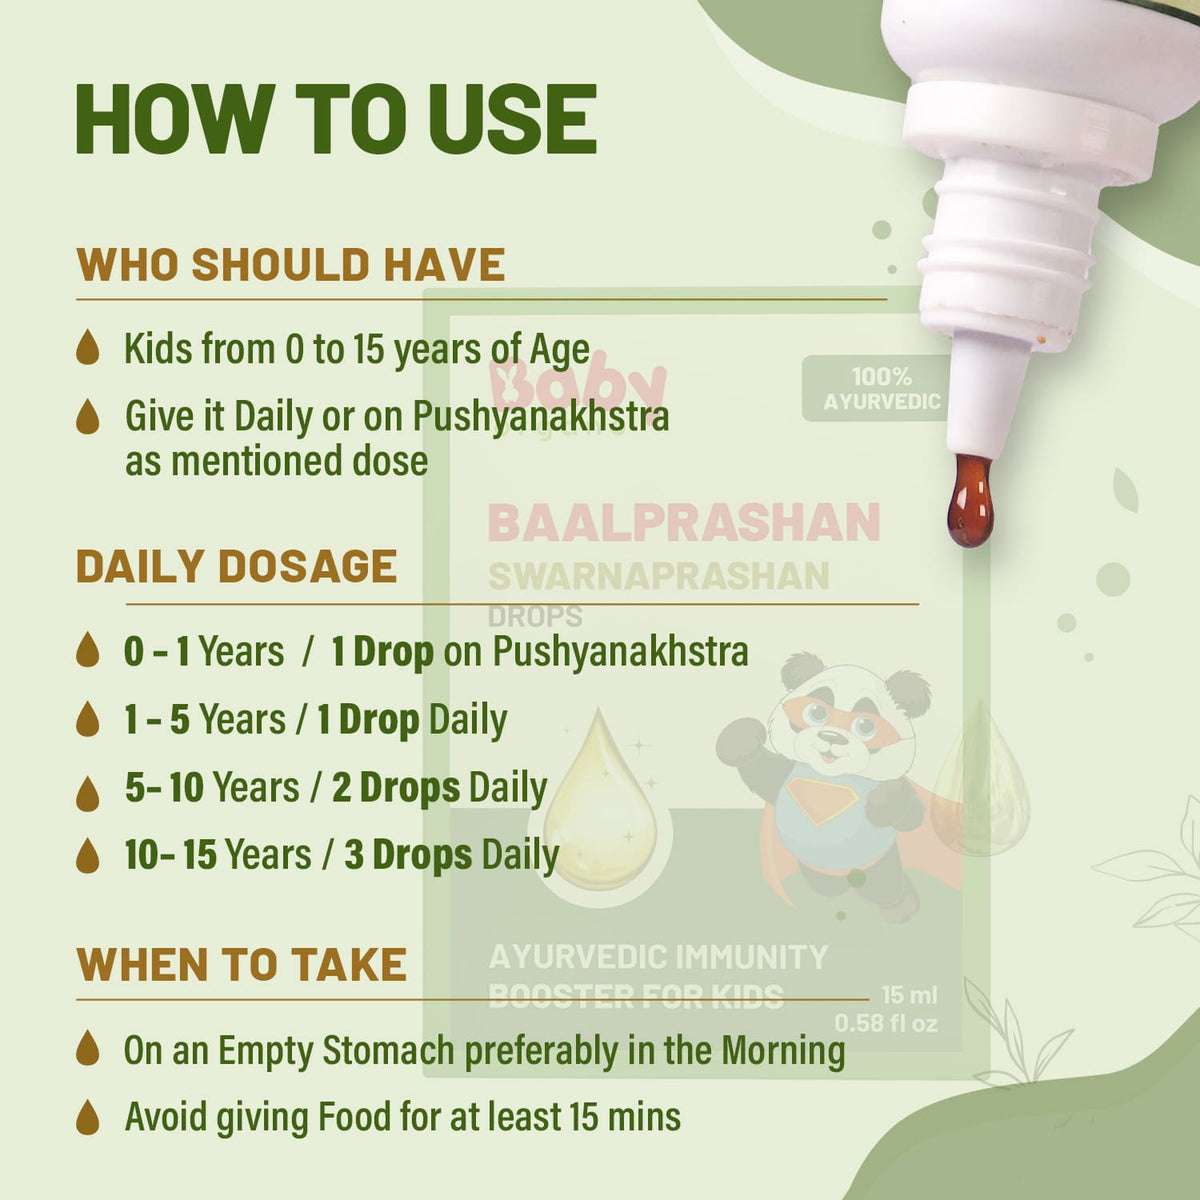 BabyOrgano Kid's Immunity & Oral Care Combo | Morning Care Combo for Kids |Swarnaprashan Drops (15ml) + Herbal Kids Toothpaste (50g)